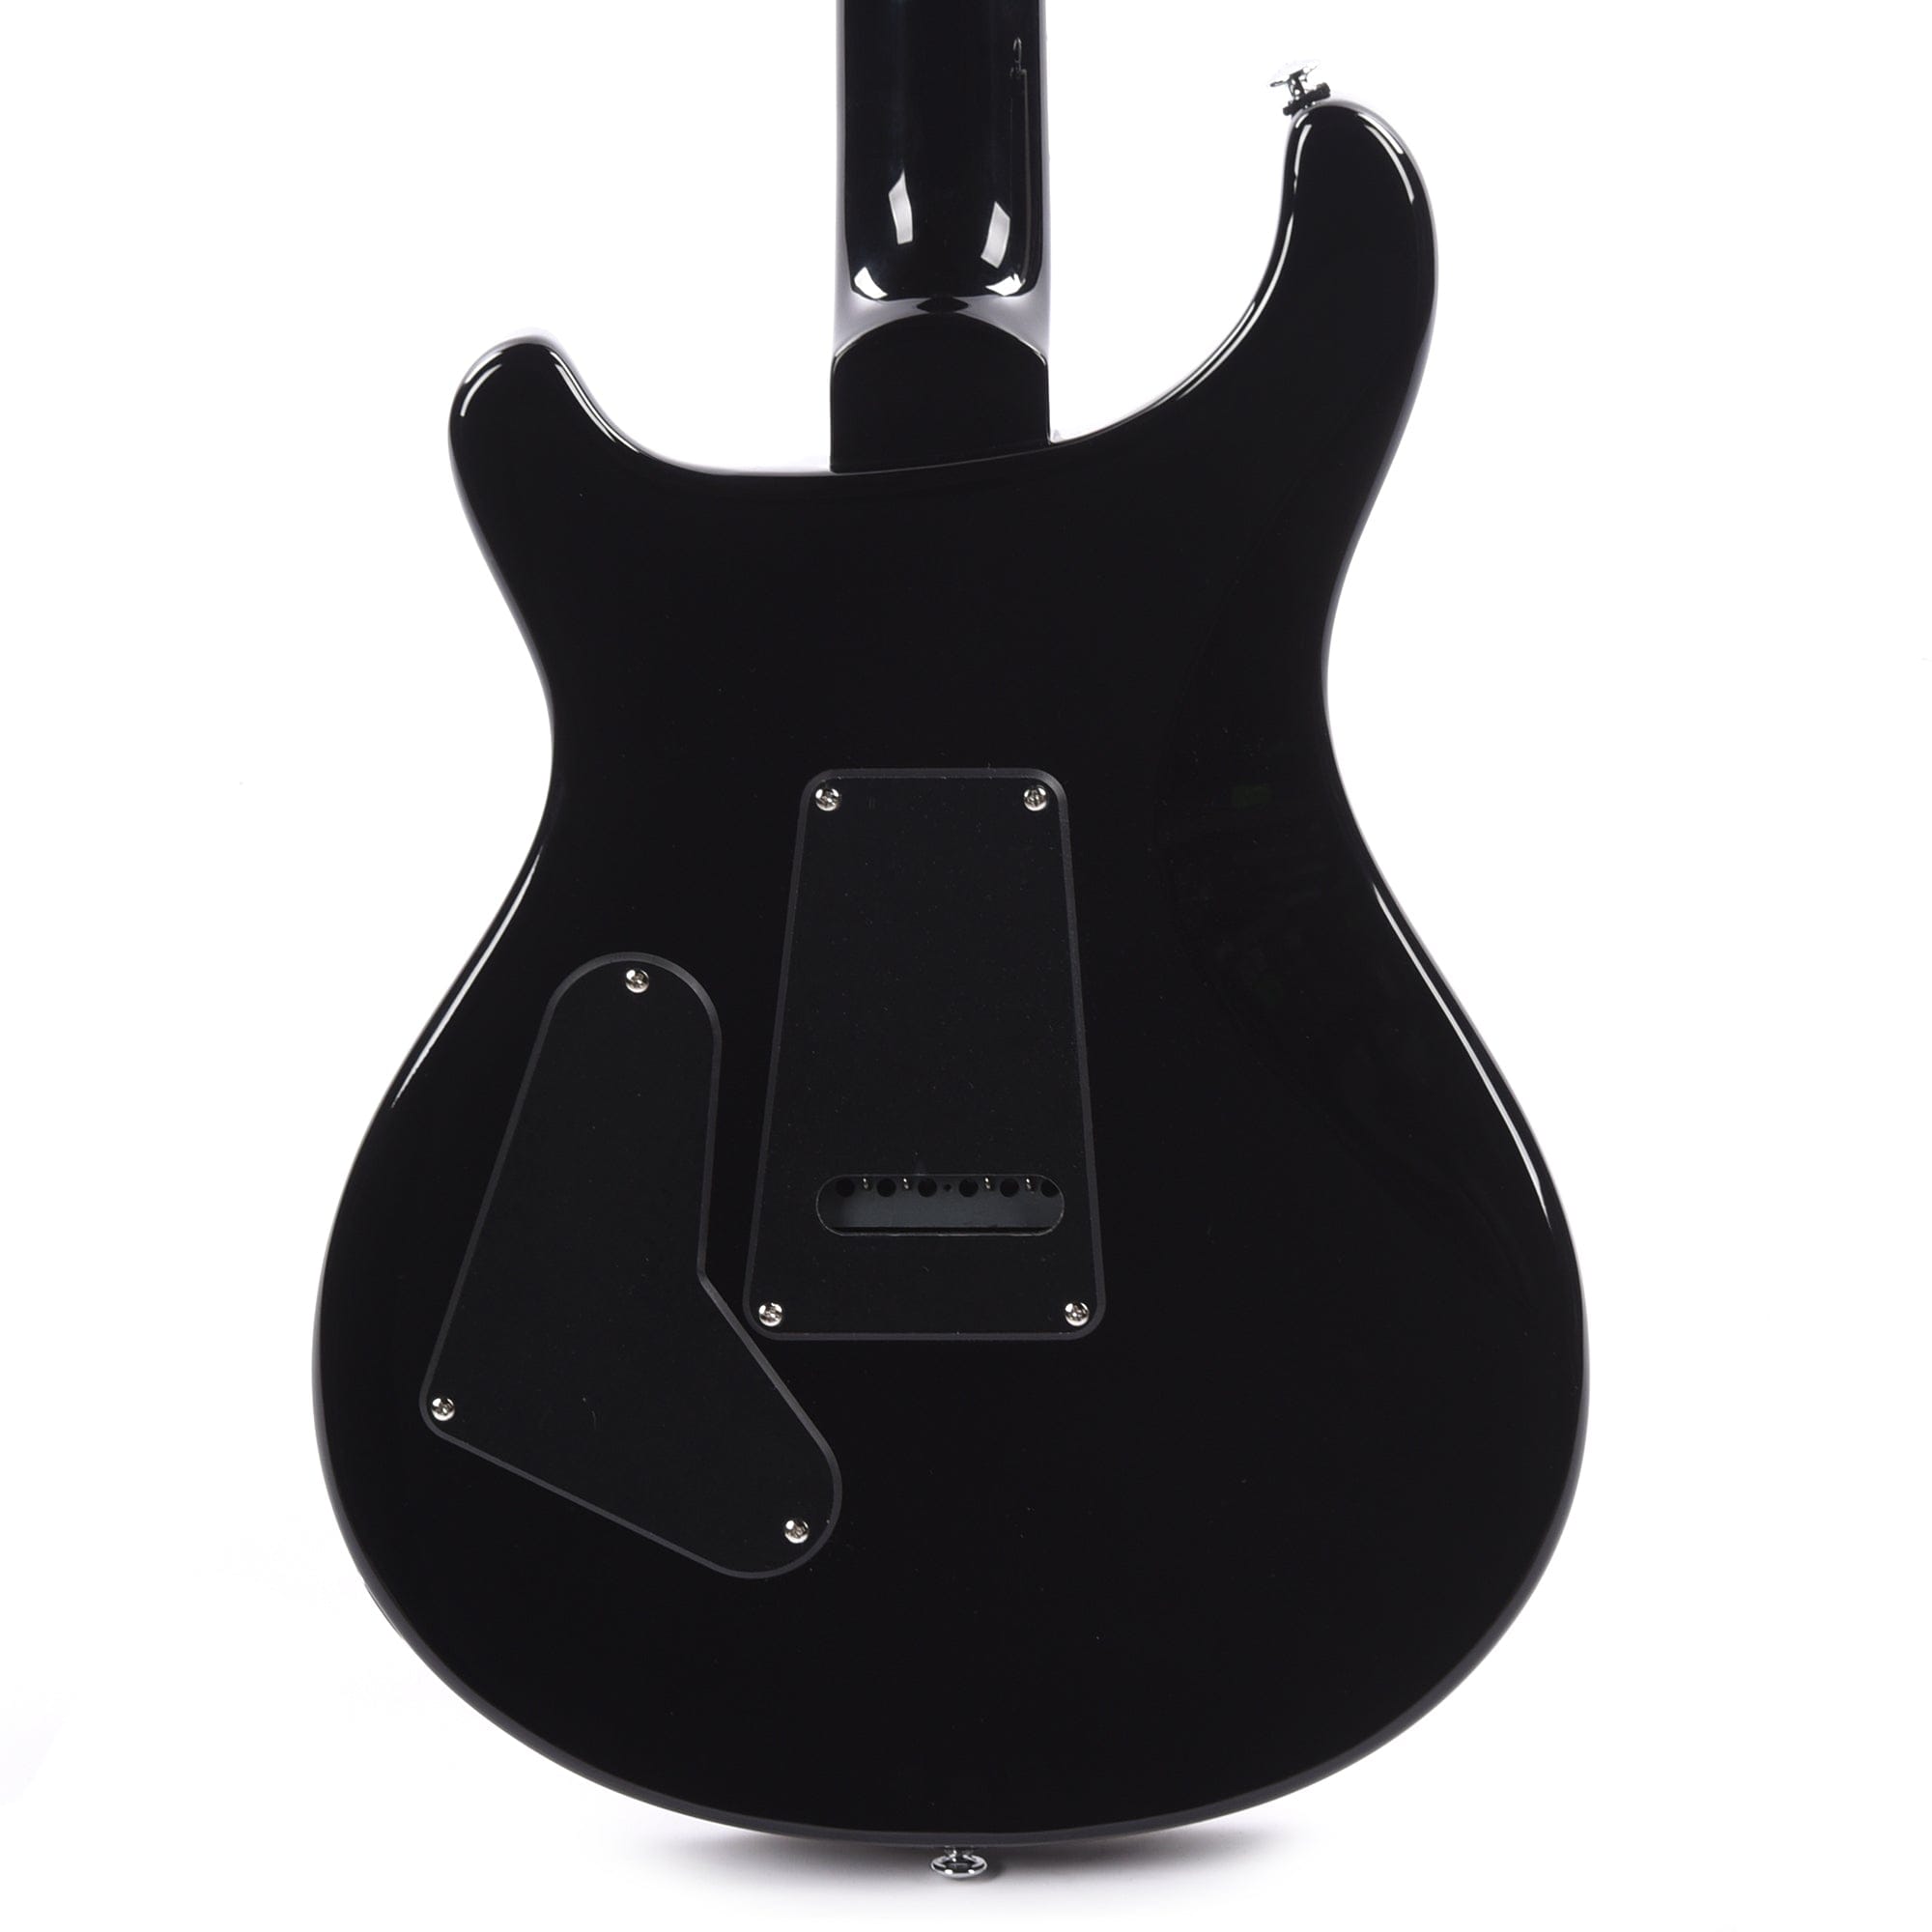 PRS SE Custom 24 Quilt Violet Electric Guitars / Solid Body